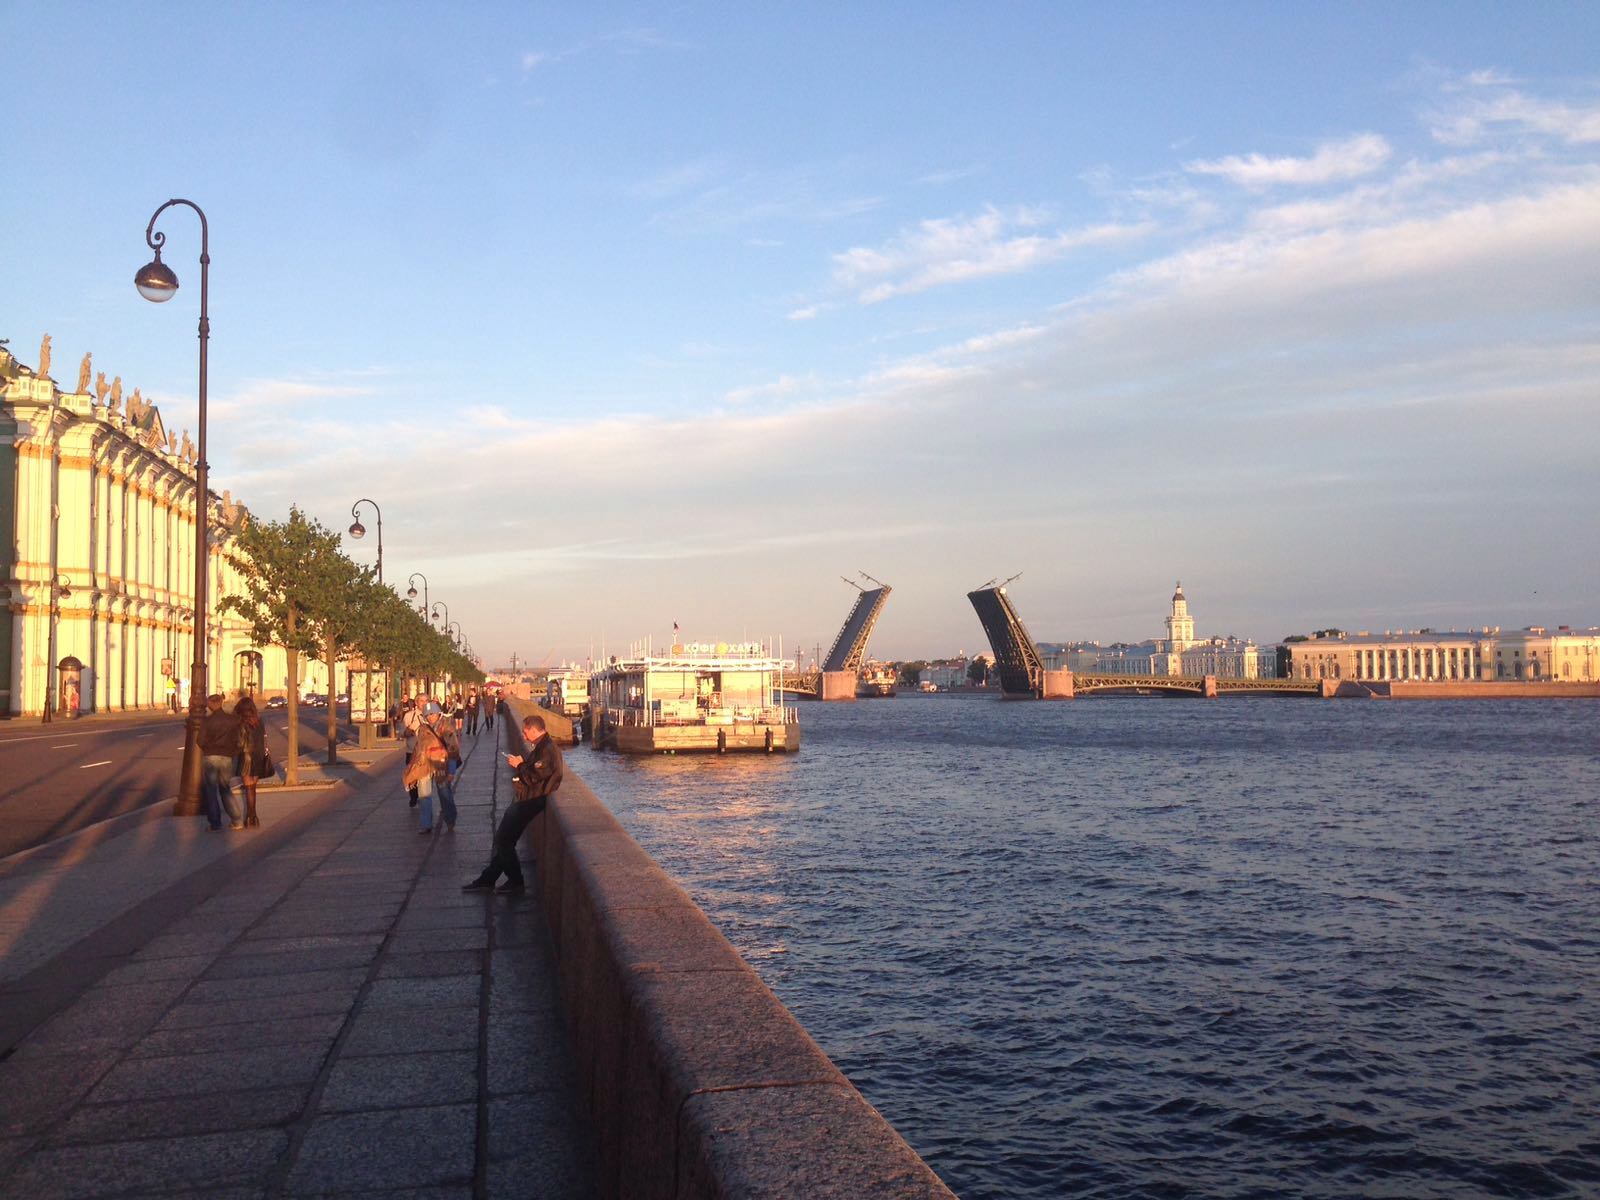 St. Petersburg bridges